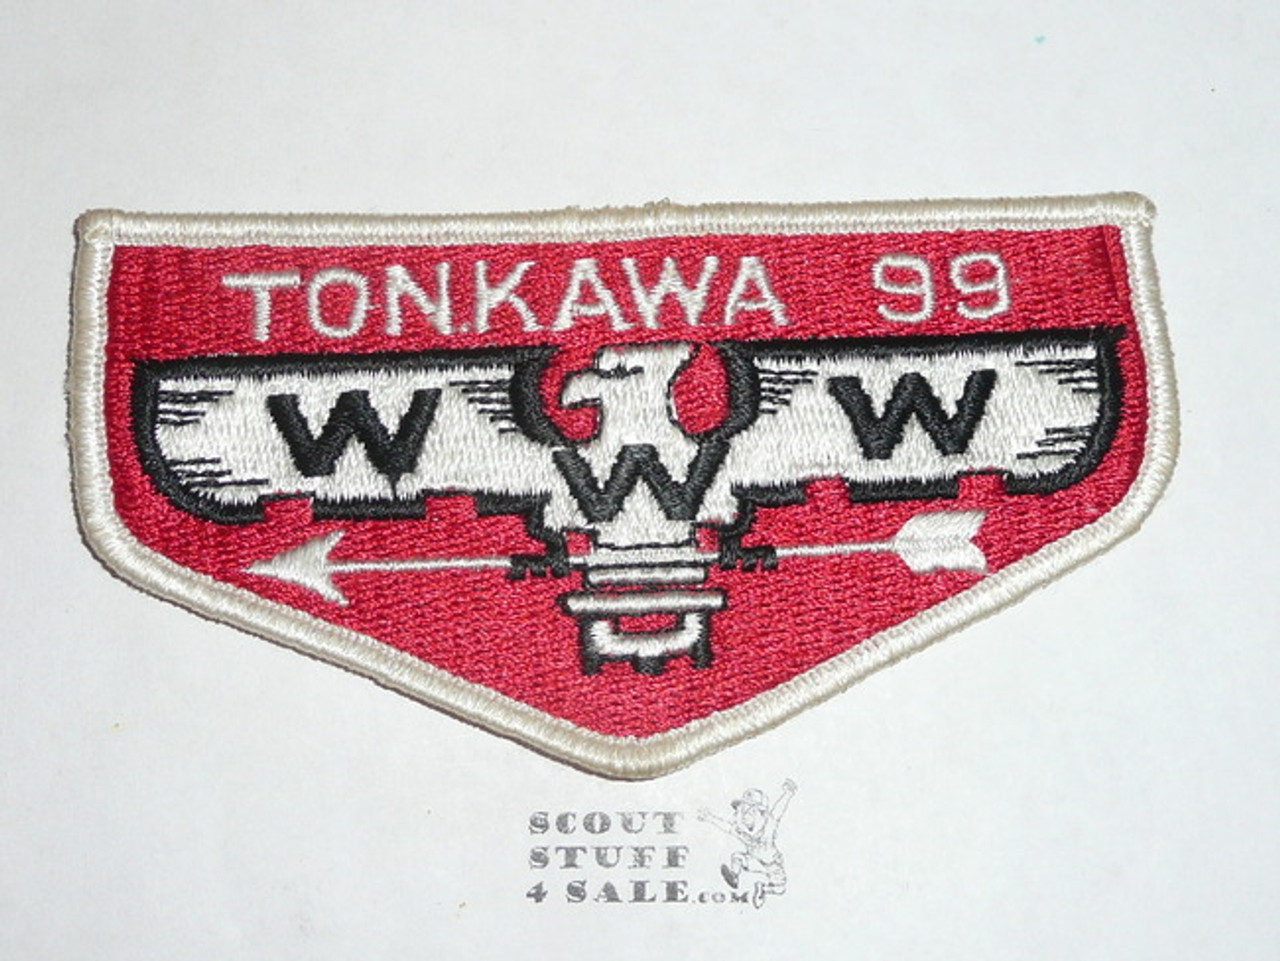 Order of the Arrow Lodge #99 Tonkawa s3 Flap Patch